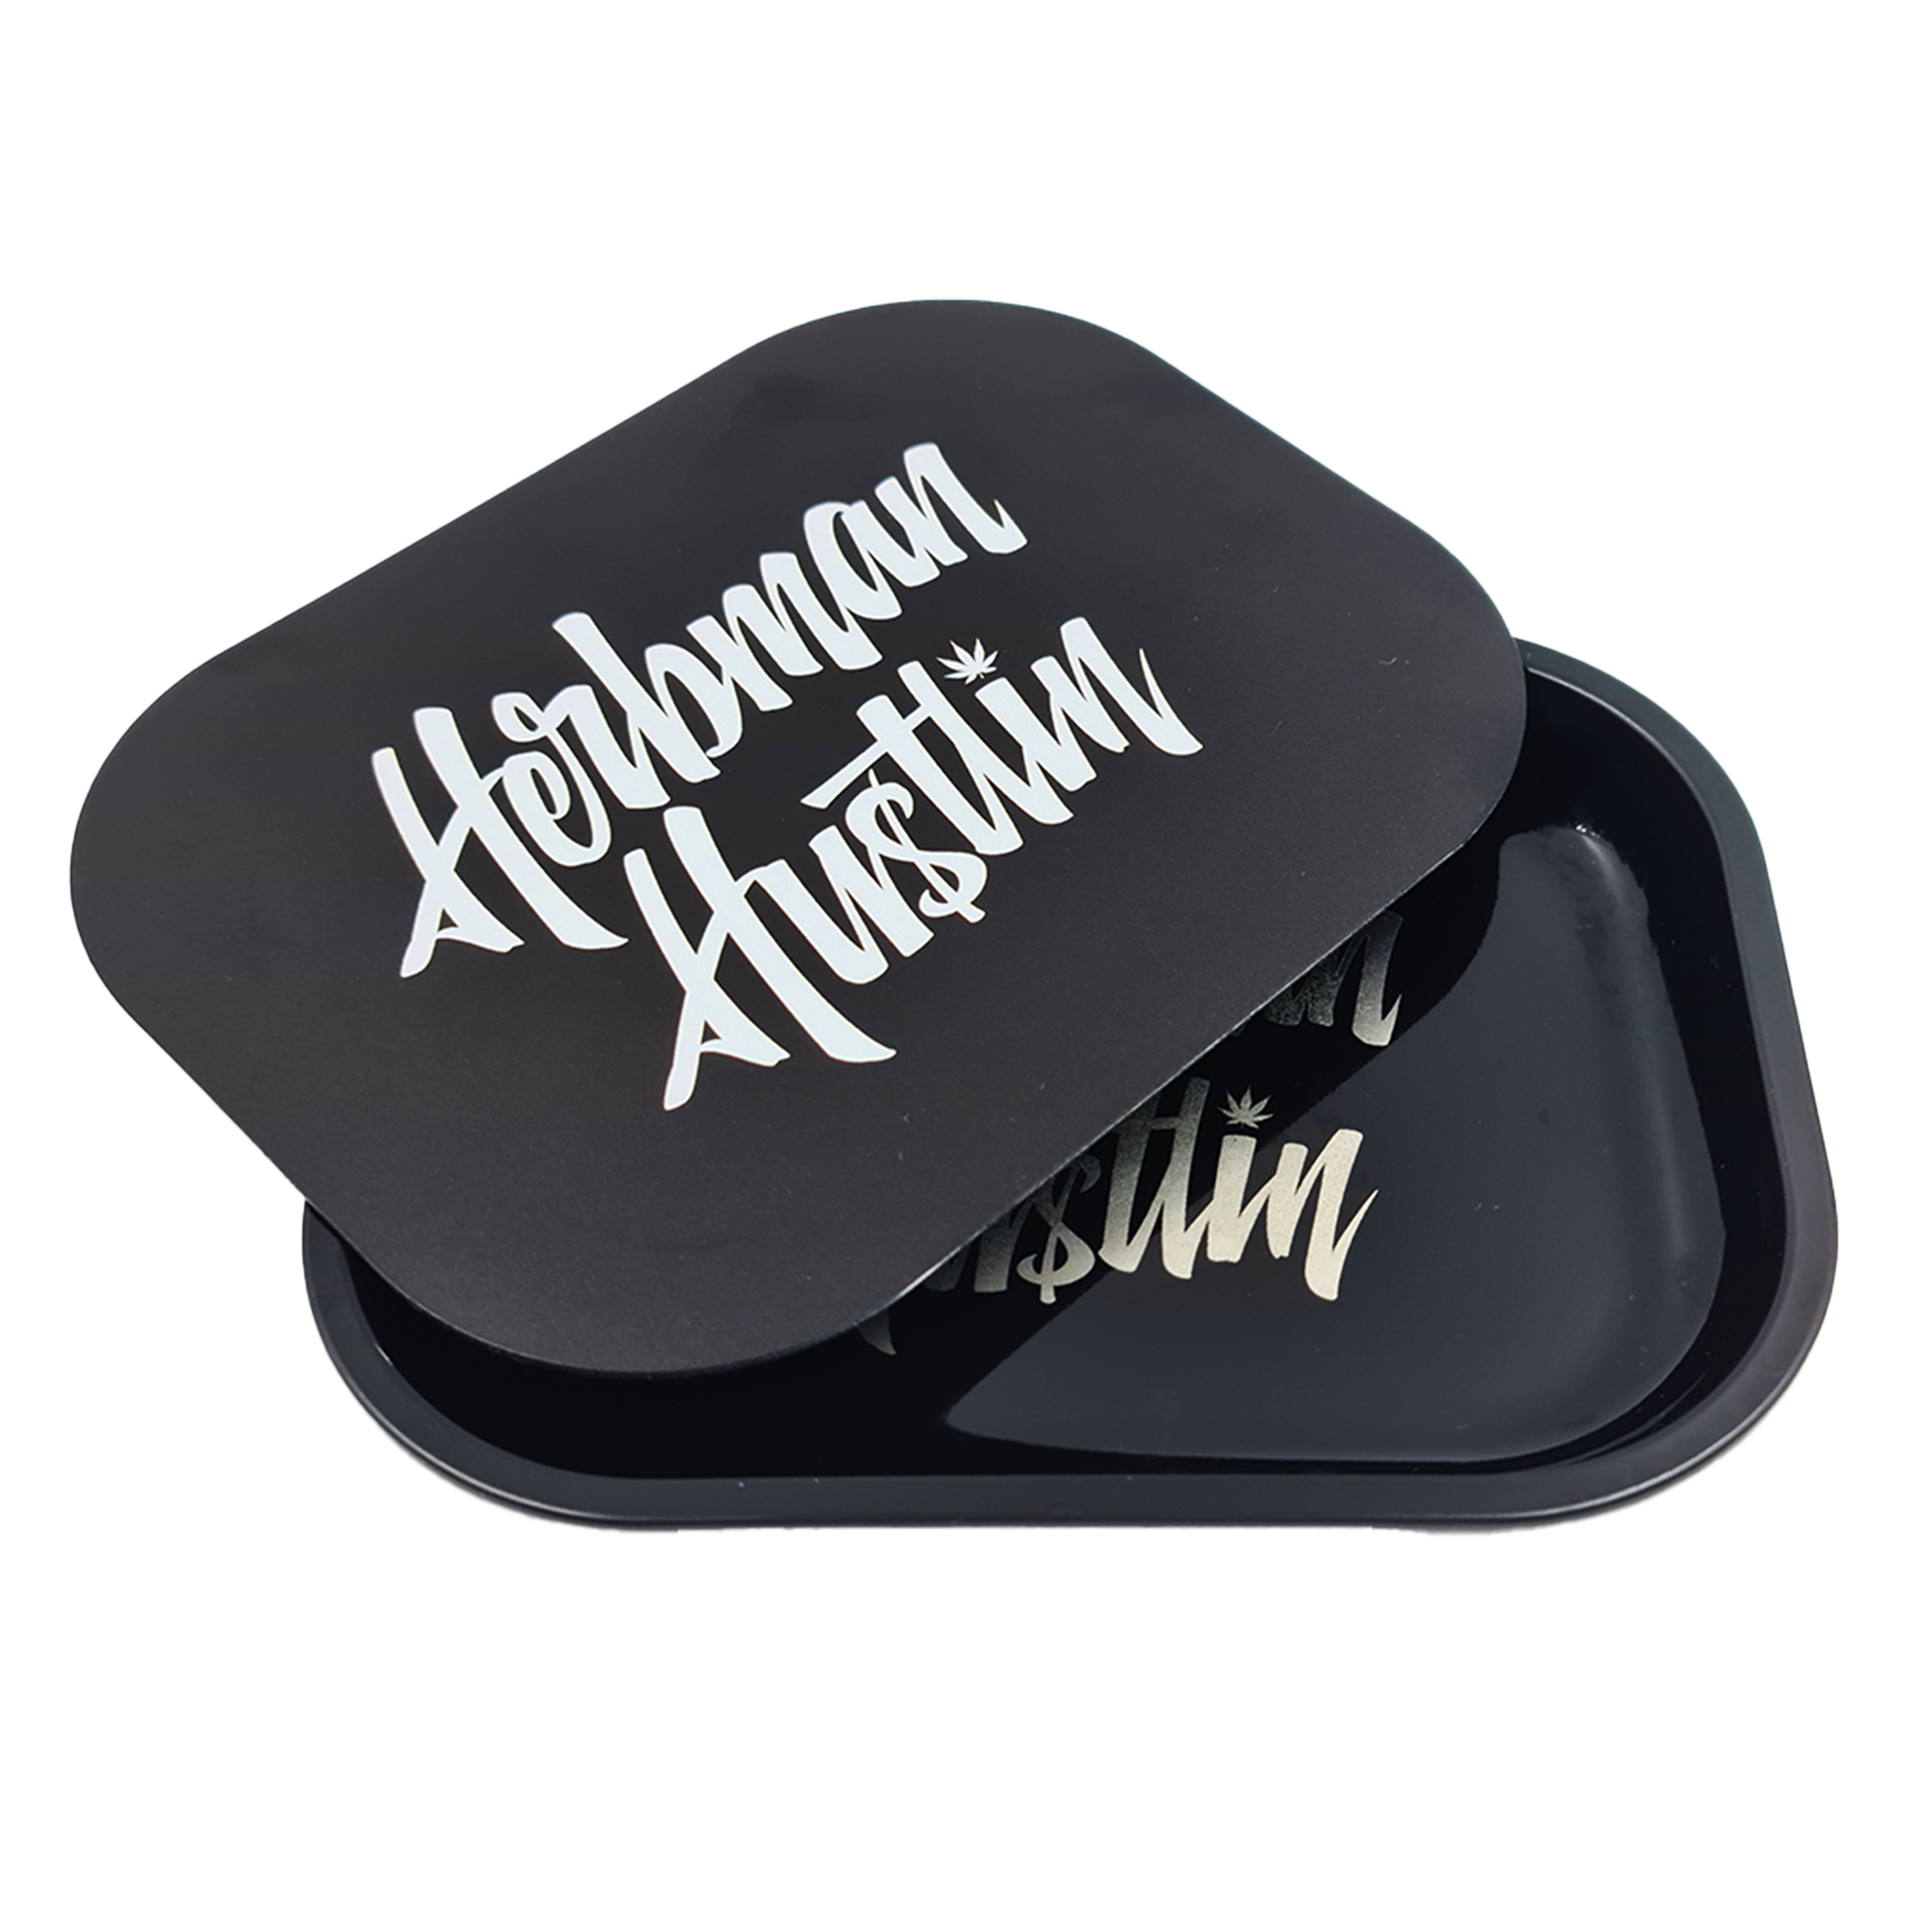 Herbman Hustlin Script Magnetic Tray - Black/White